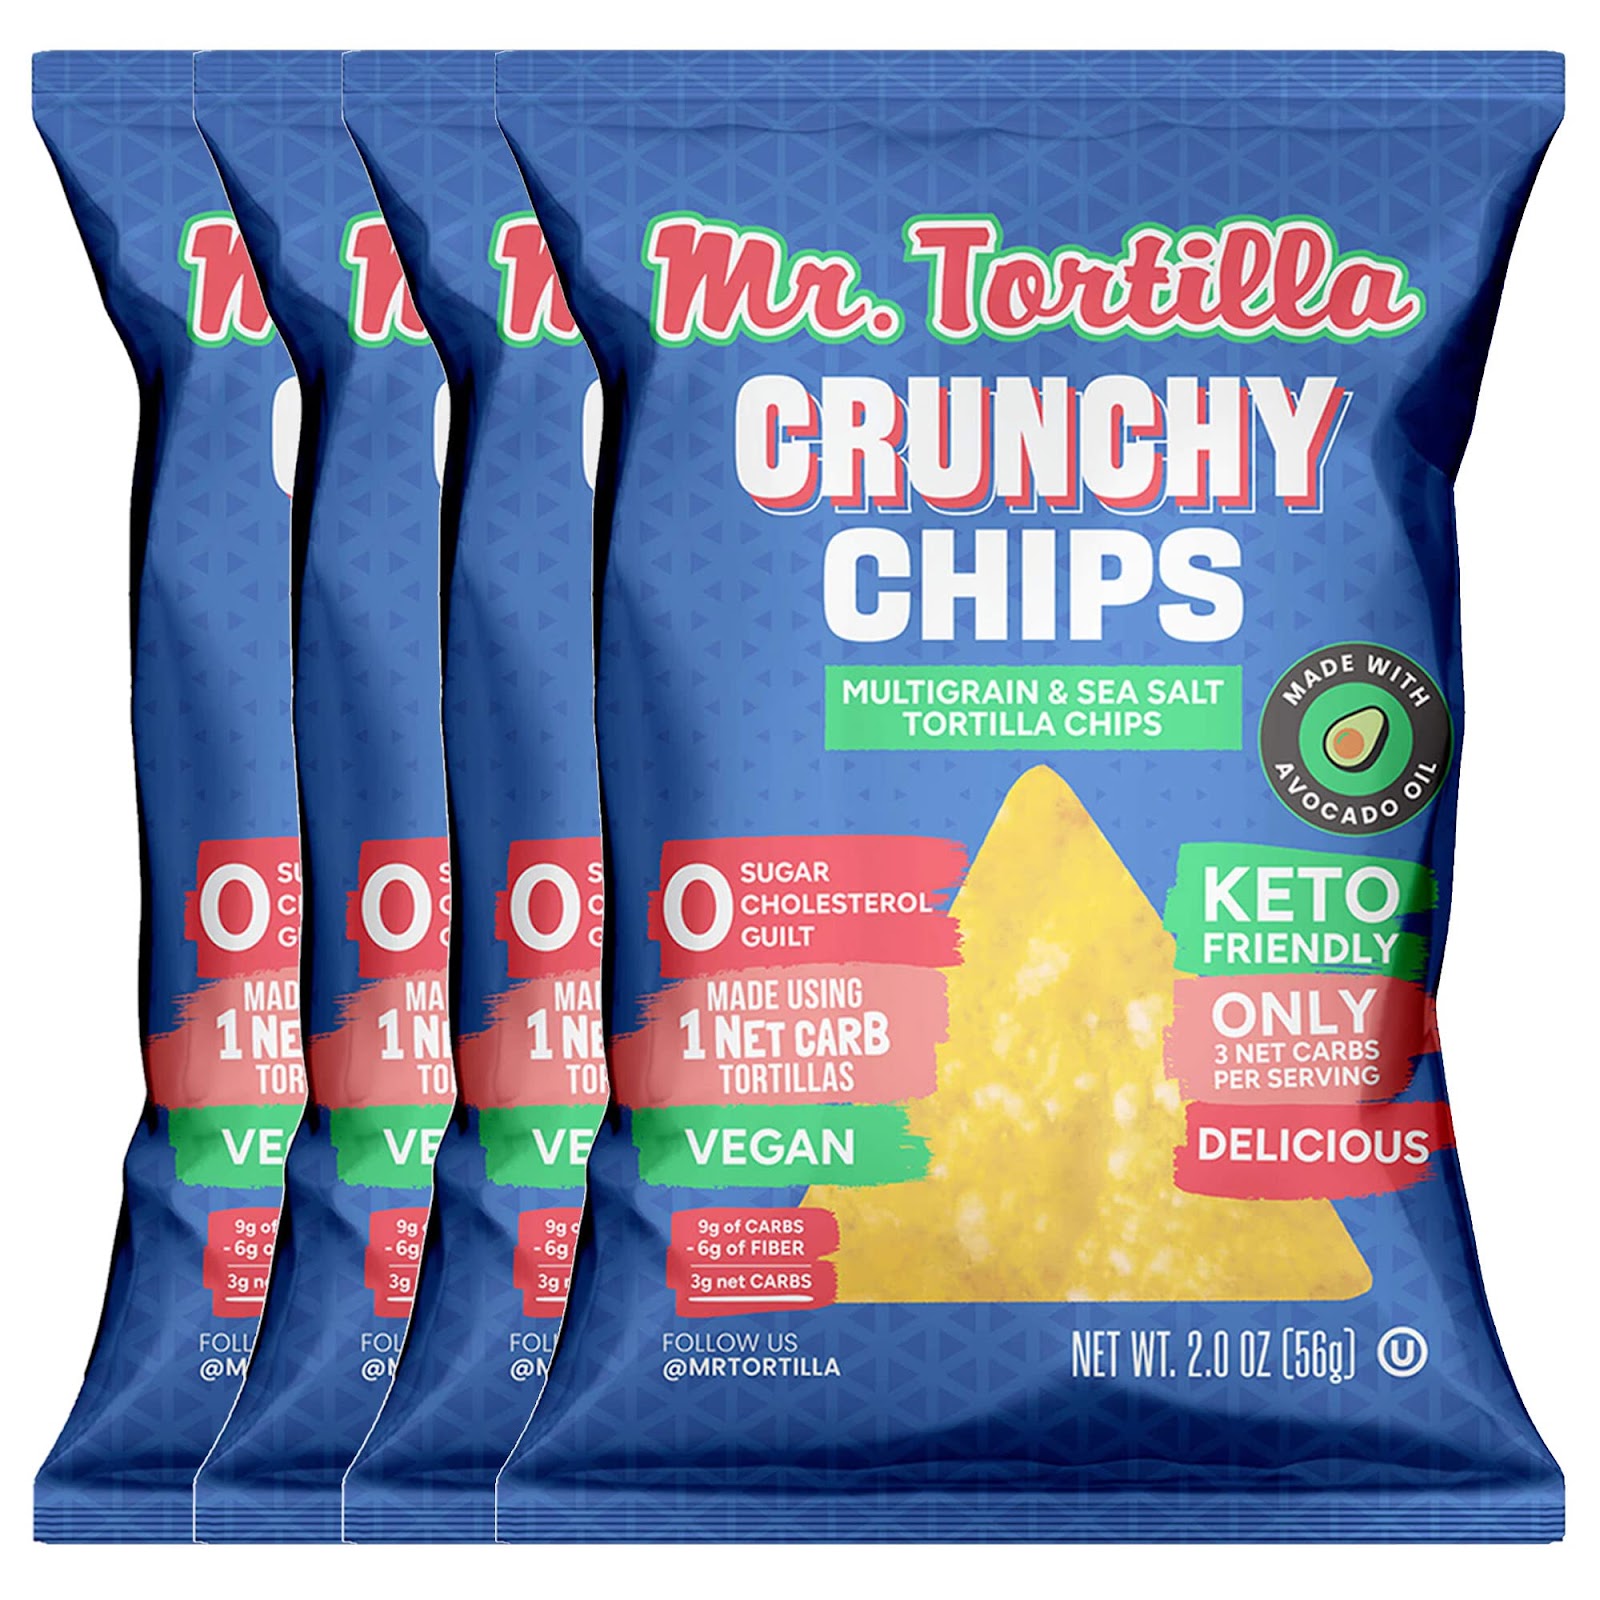 Mr. Tortilla's Crunchy Chips